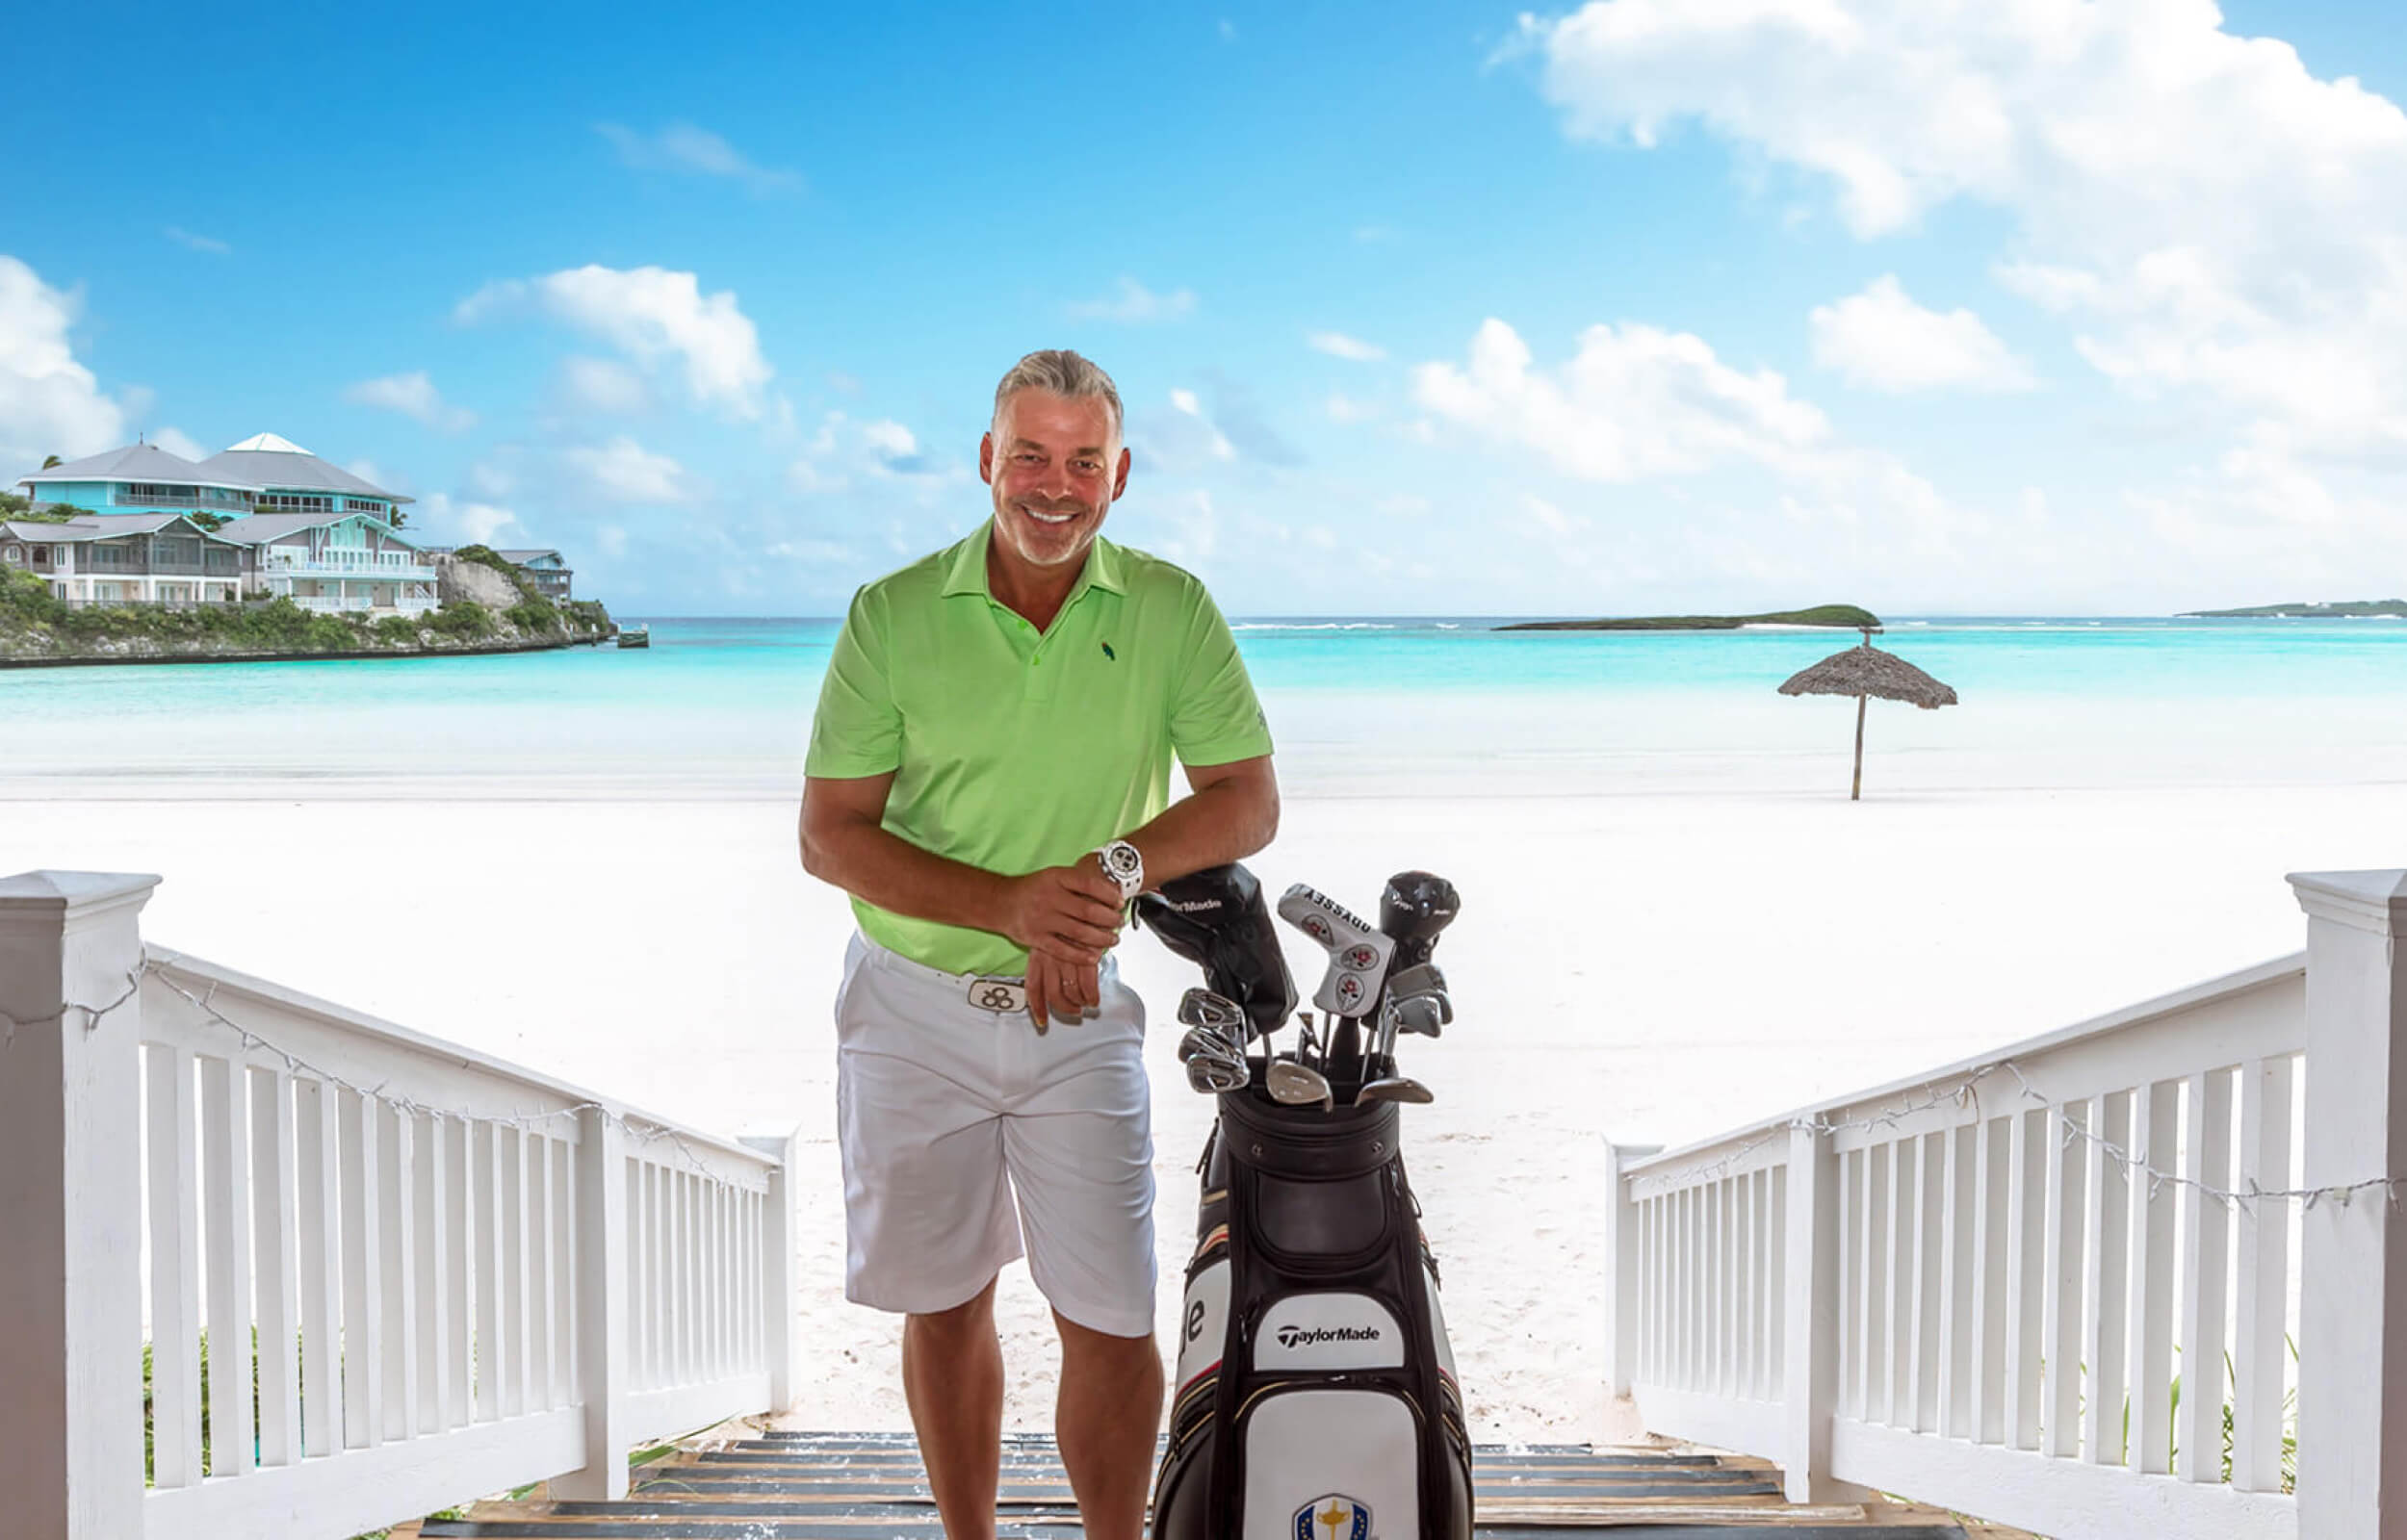 Abaco Club Ambassador and professional Golfer Darren Clarke